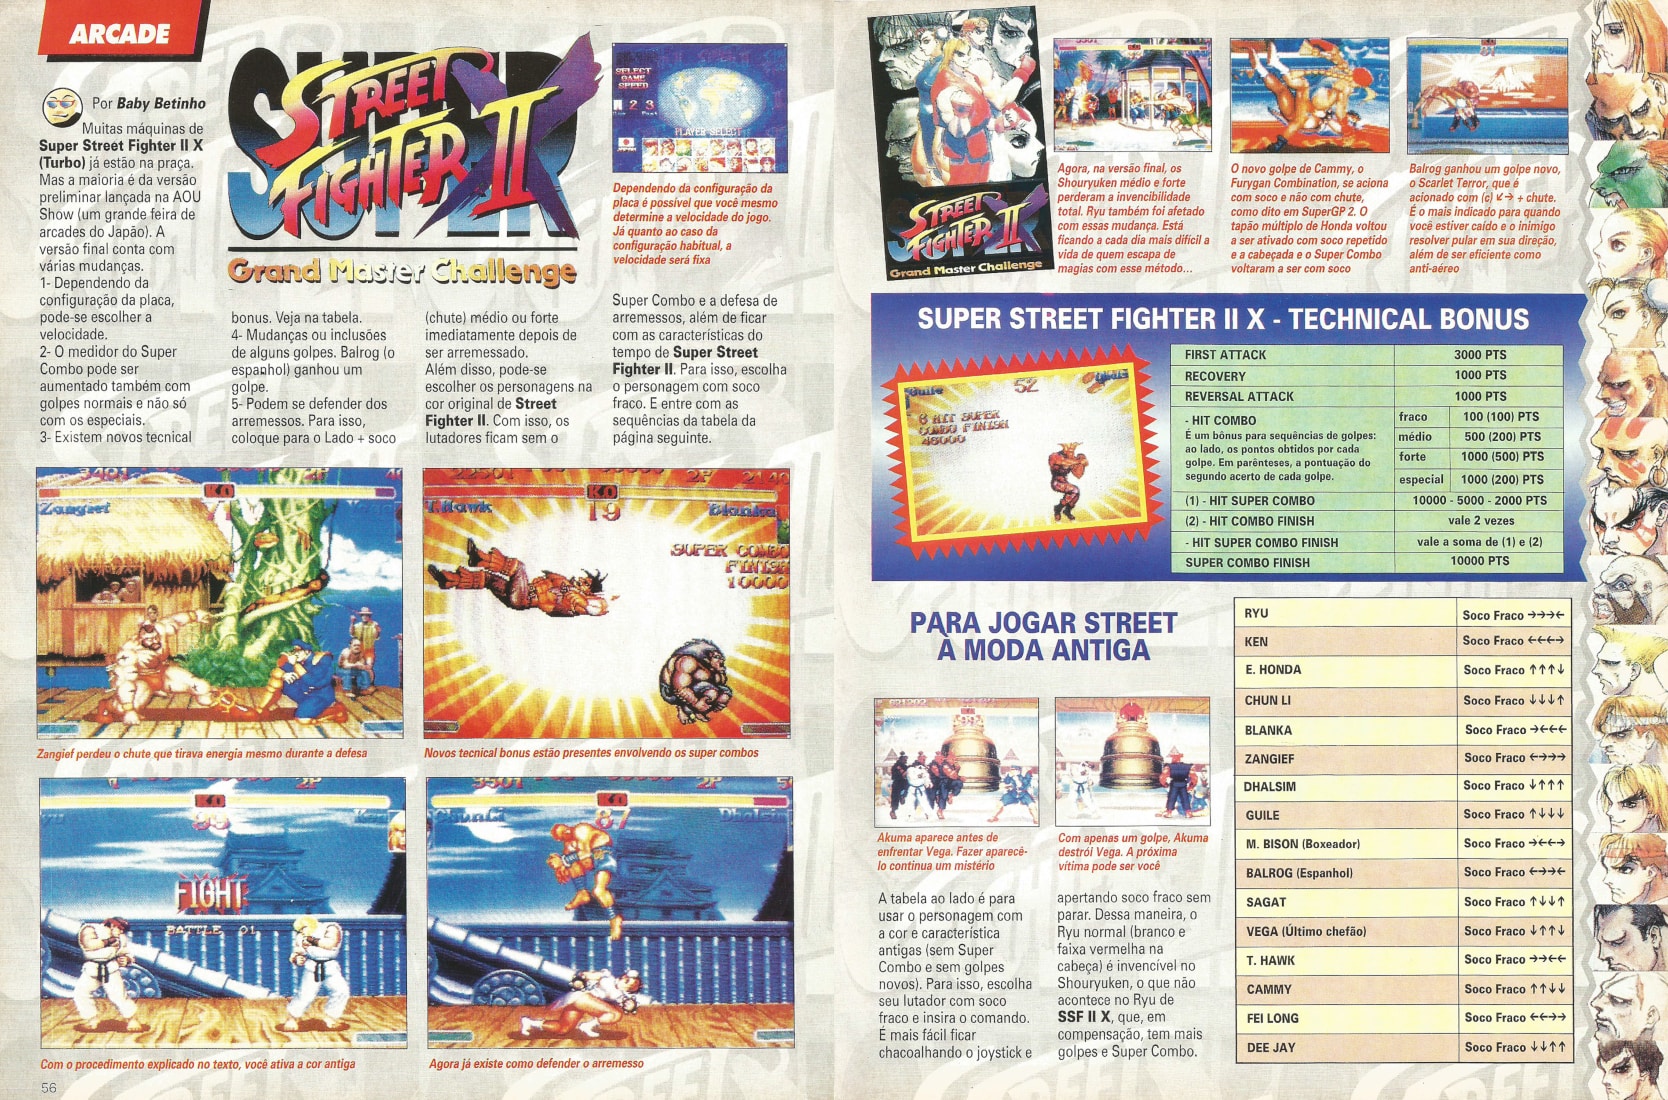 Super Street Fighter II Turbo do Arcade na Super GamePower Nº 2